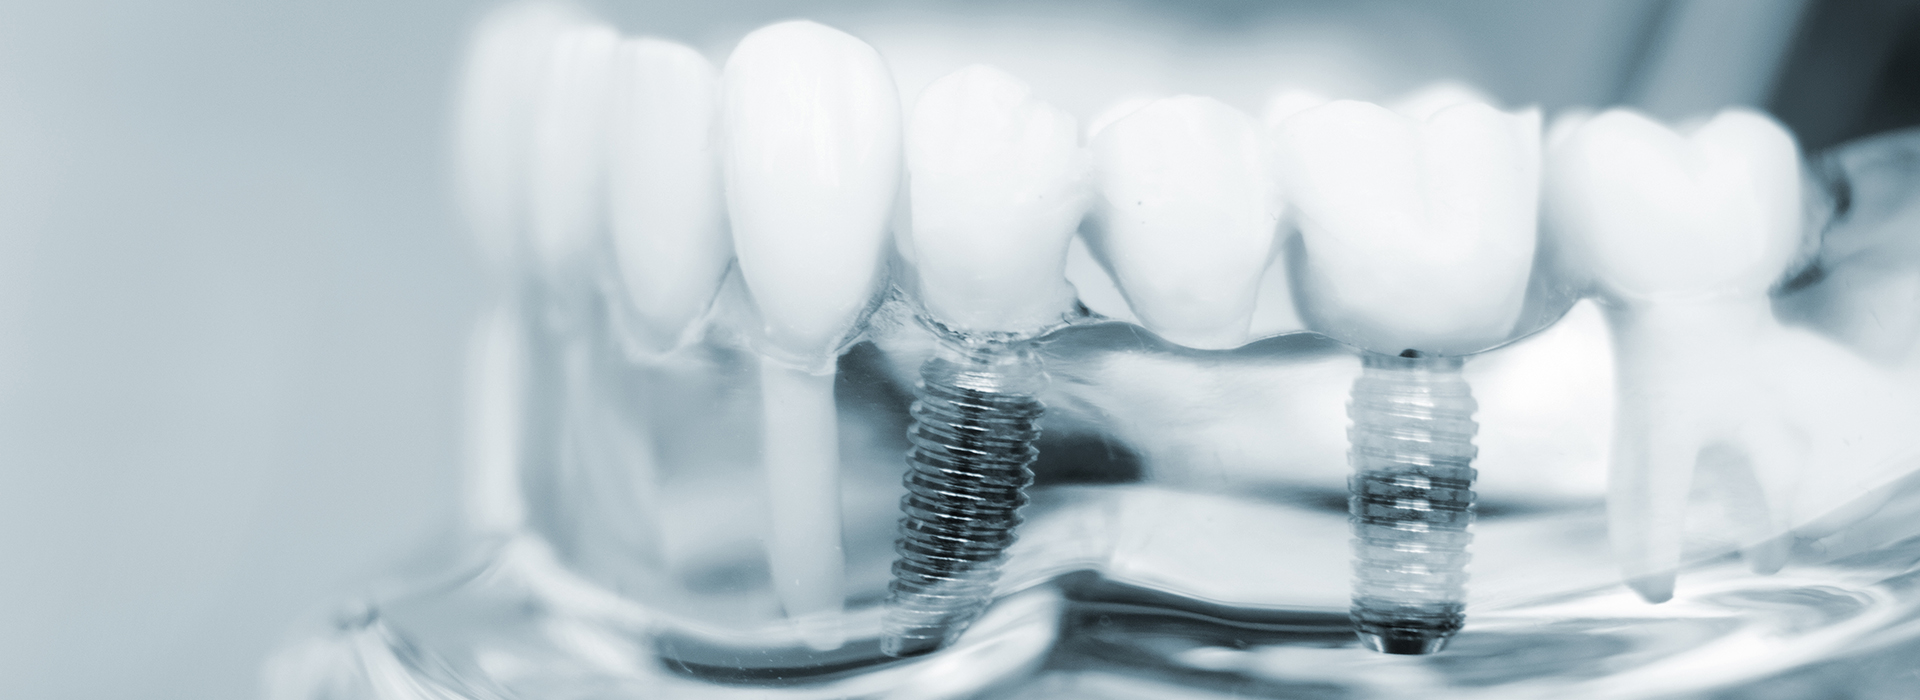 Morgan Hill Dental Care | Endodontics, Hygienist Services and Orthodontics